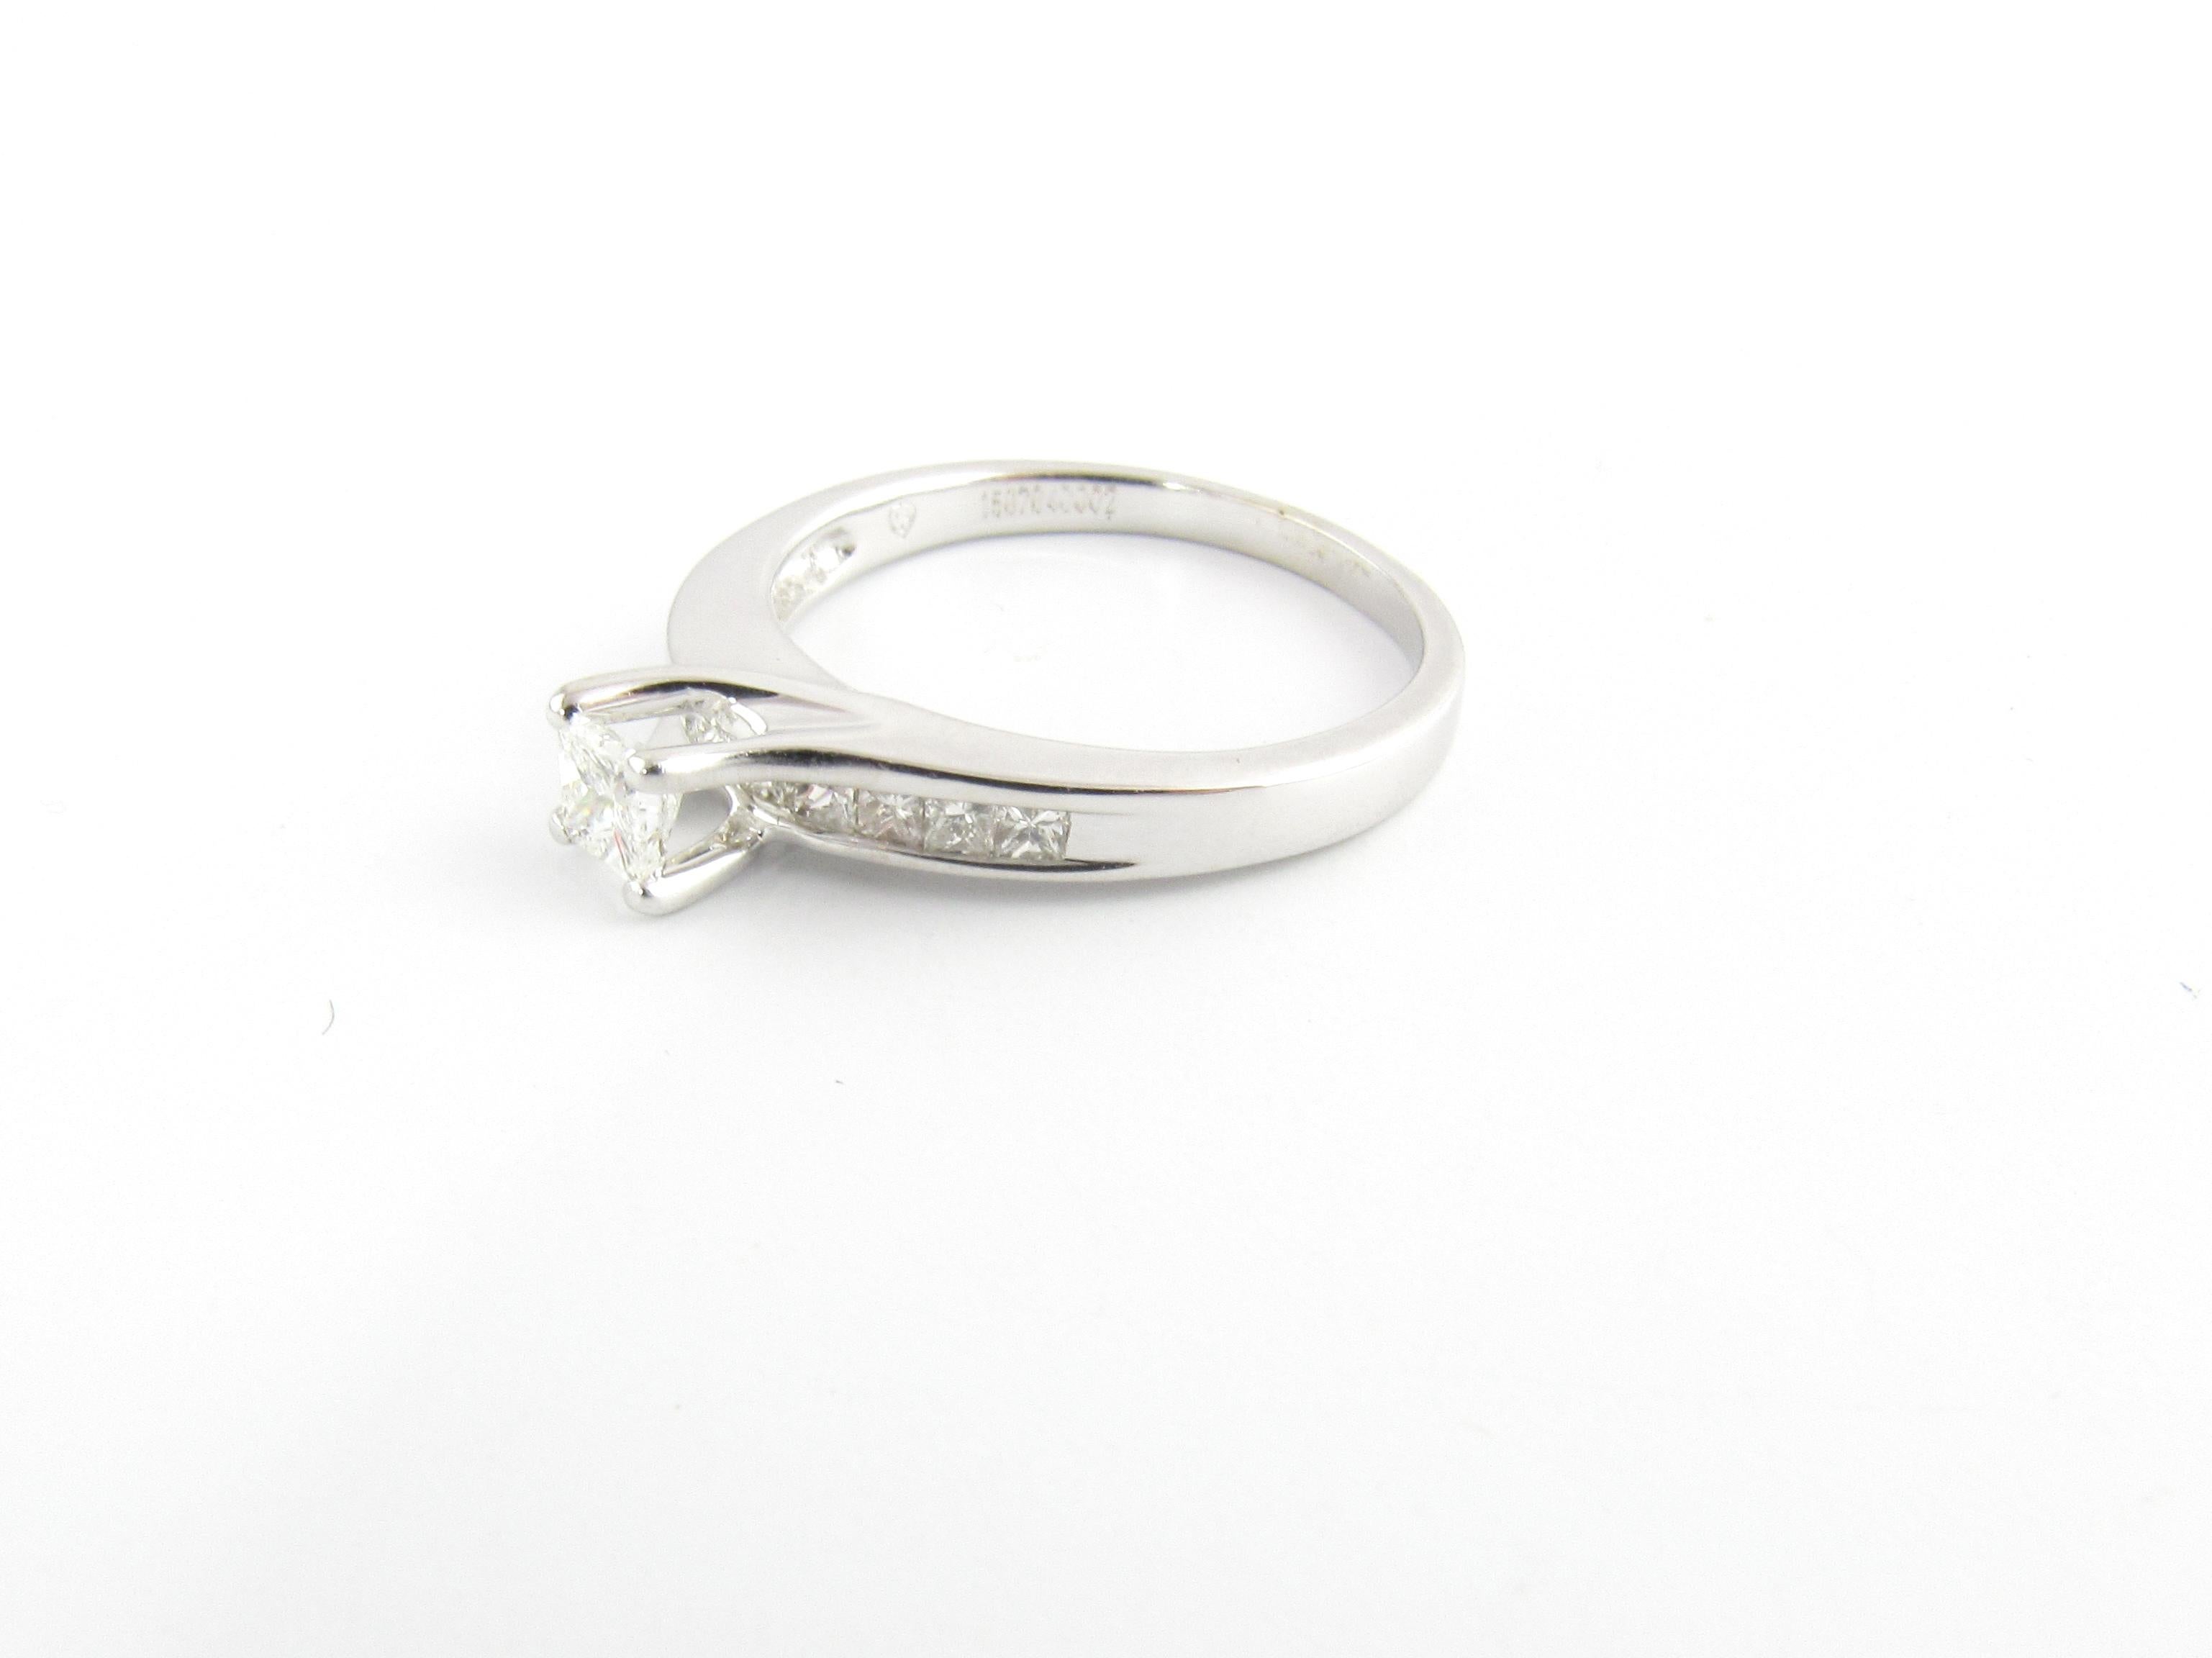 14K White Gold Princess Cut Diamond Engagement Ring 

Center princess cut diamond with 10 princess side diamonds.

Size 8 1/4.

Marked: 14K, maker's logo

Ring weight: 3.7g  2.3dwt

EGL Certified:

3.74 x 3.68 x 2.80 MM

Diamonds : Center is .32